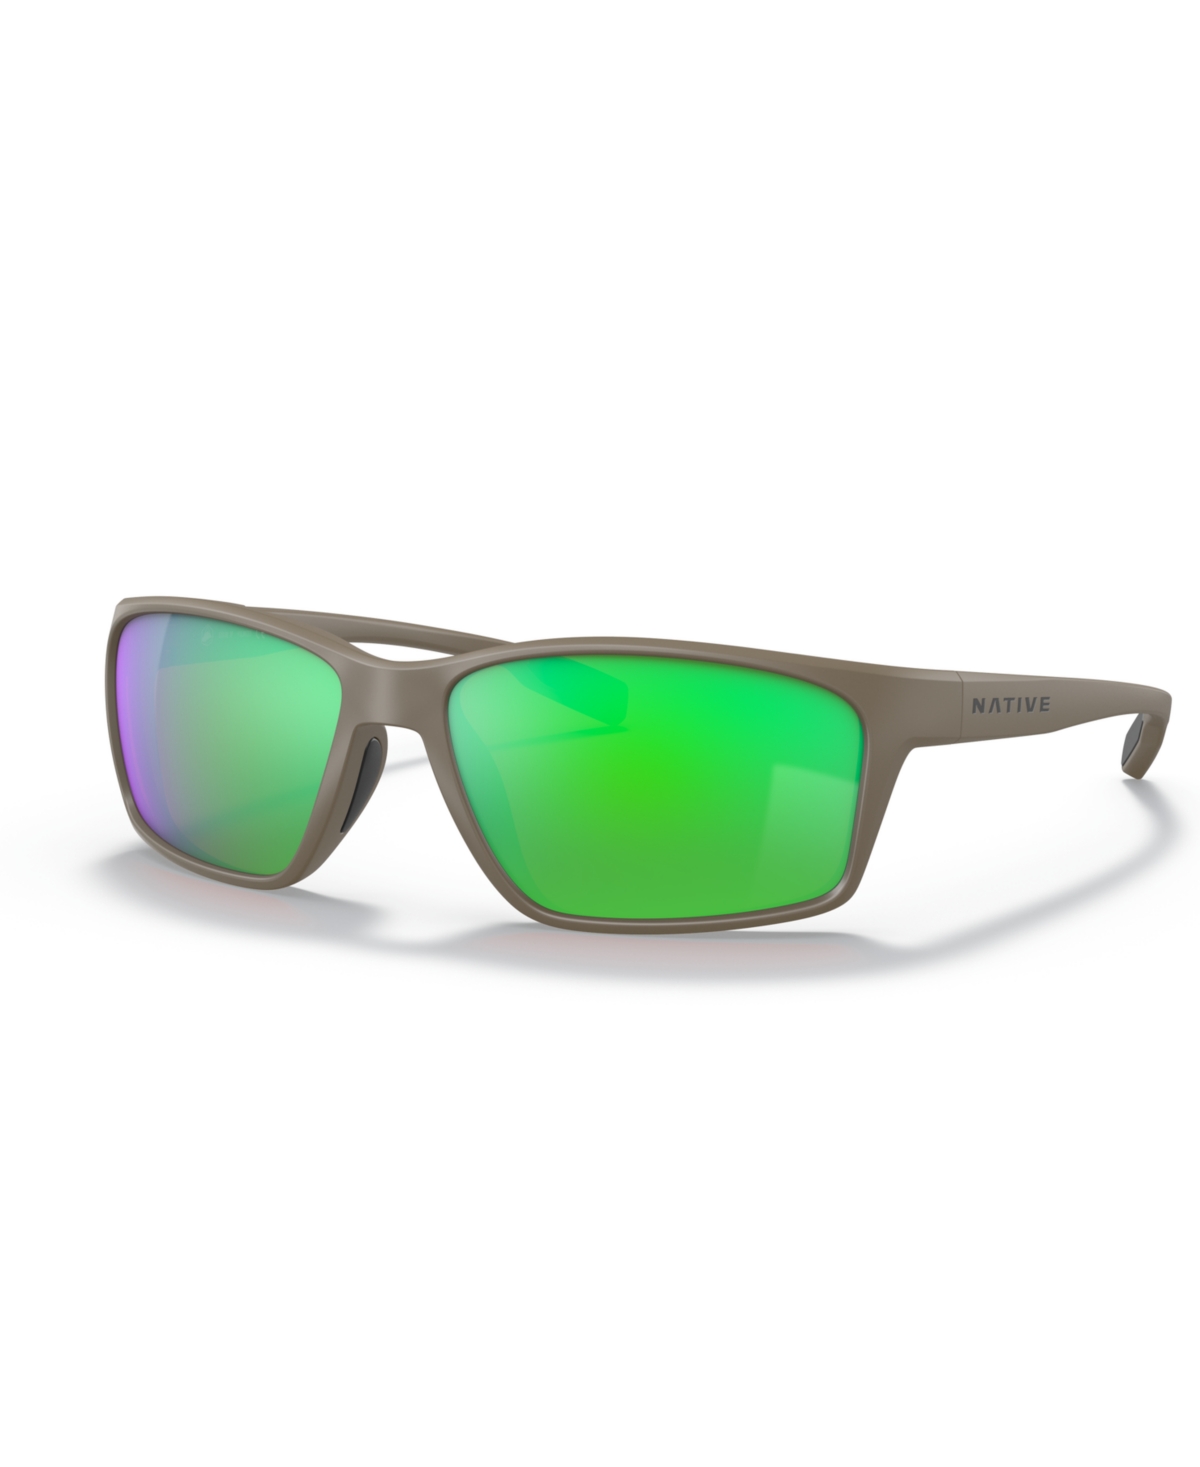 Men's Polarized Sunglasses, XD9037 Kodiak Xp 60 - Matte Green